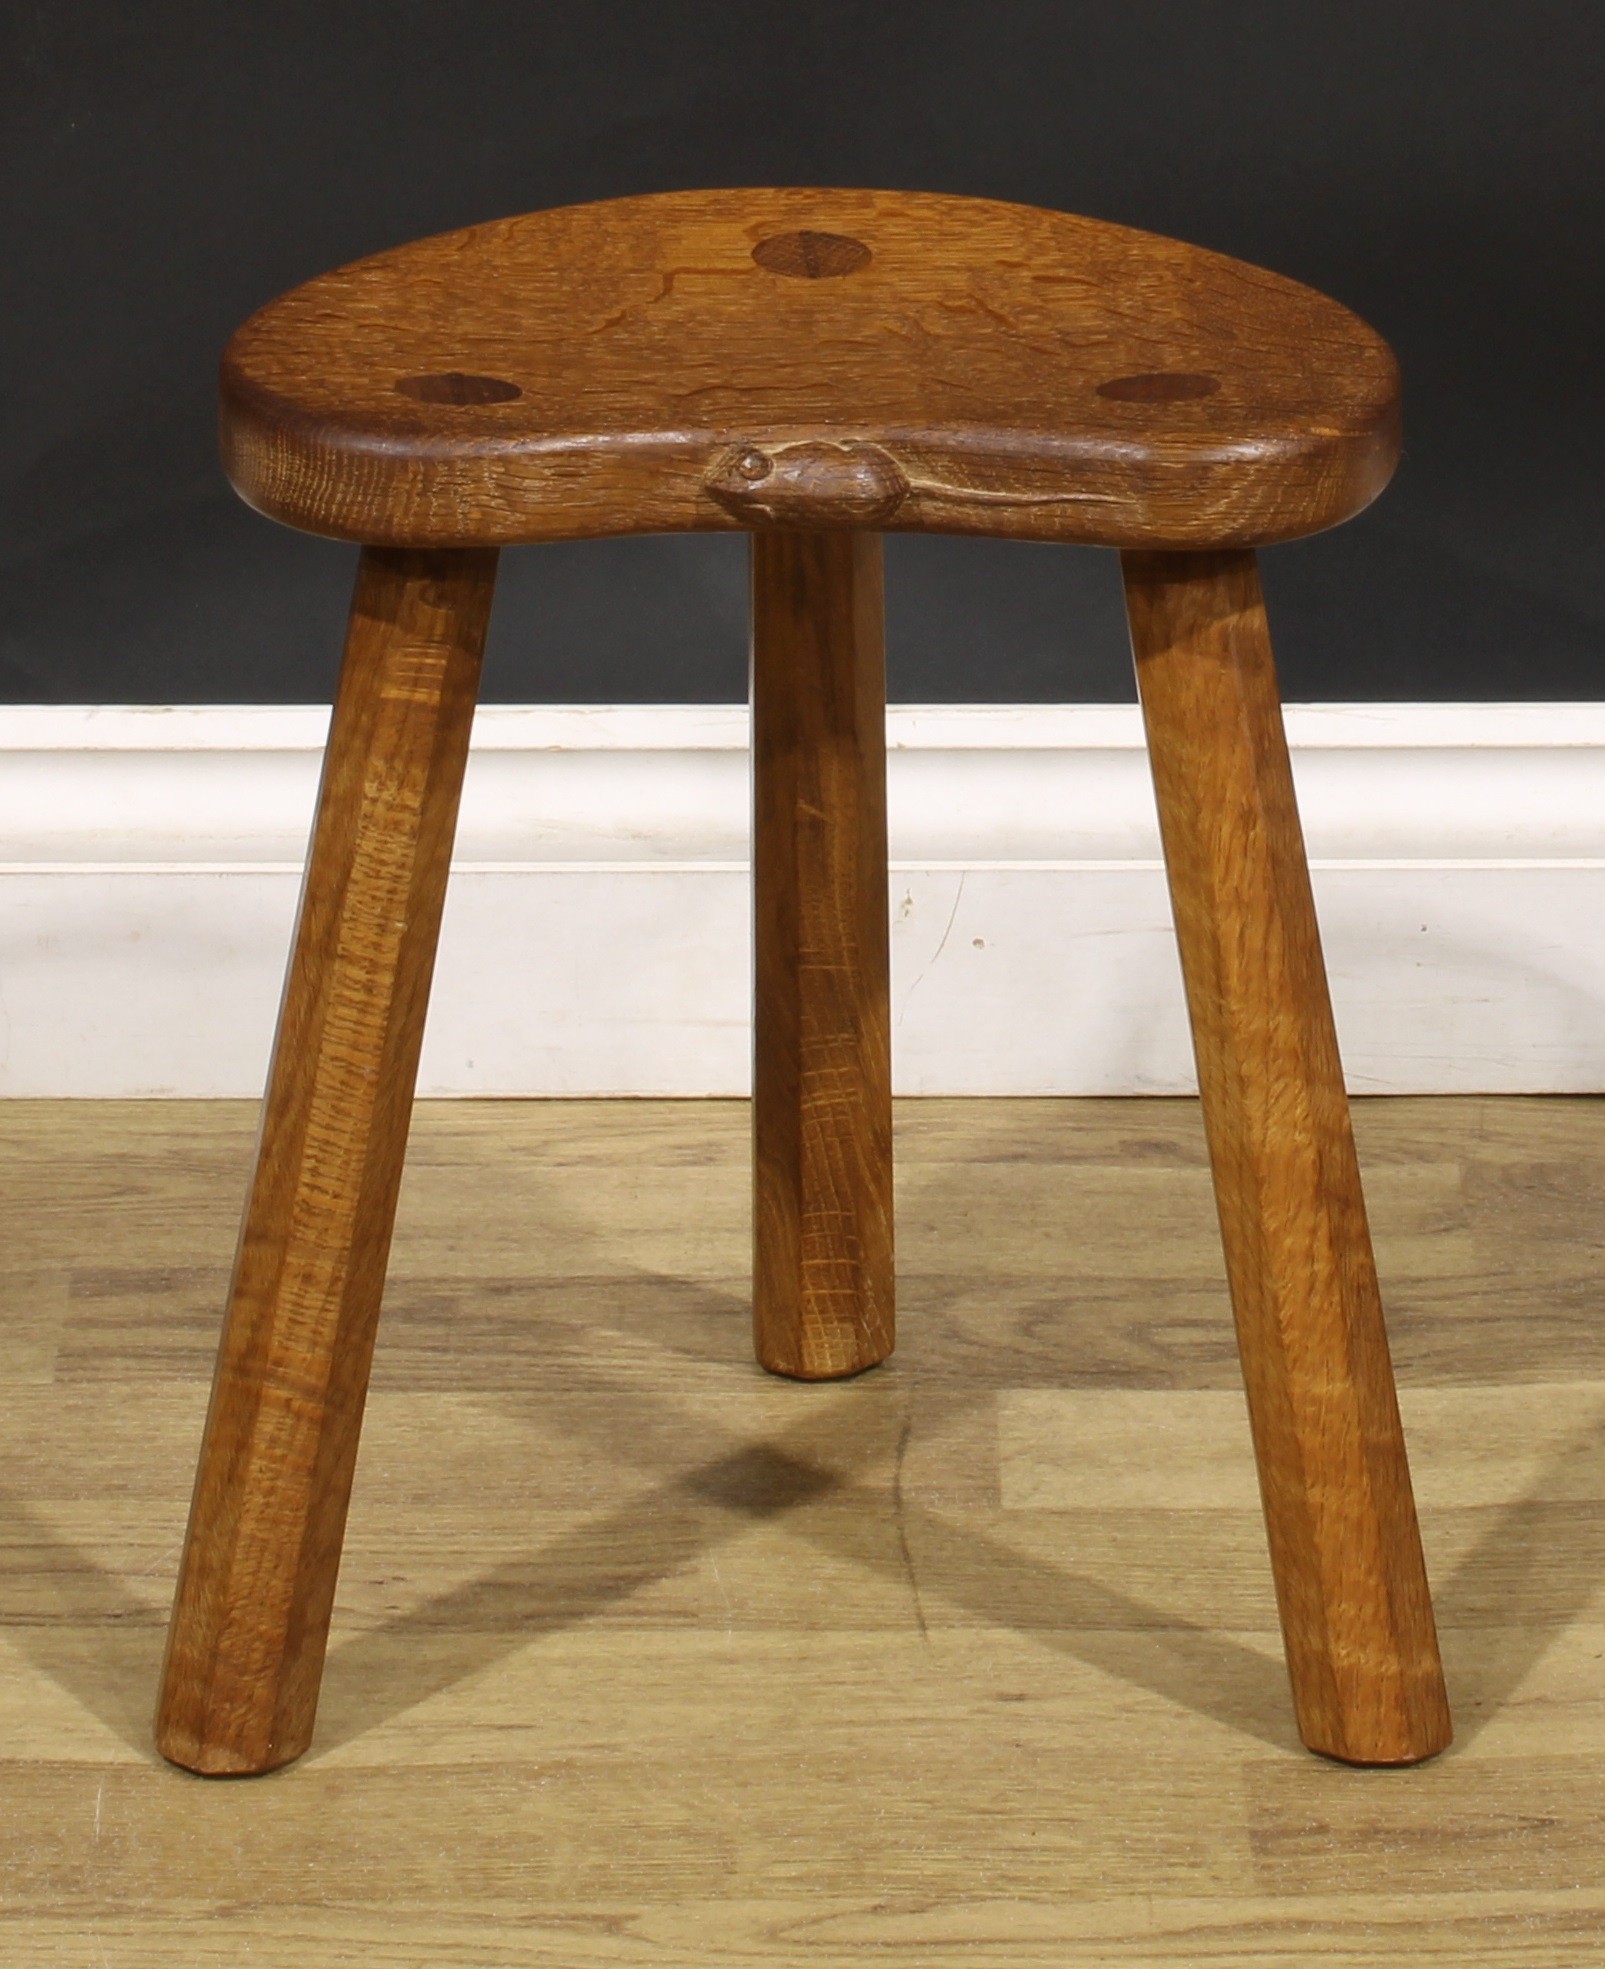 Robert Thompson, Mouseman of Kilburn, an oak milking stool, carved mouse signature, 35.5cm high,